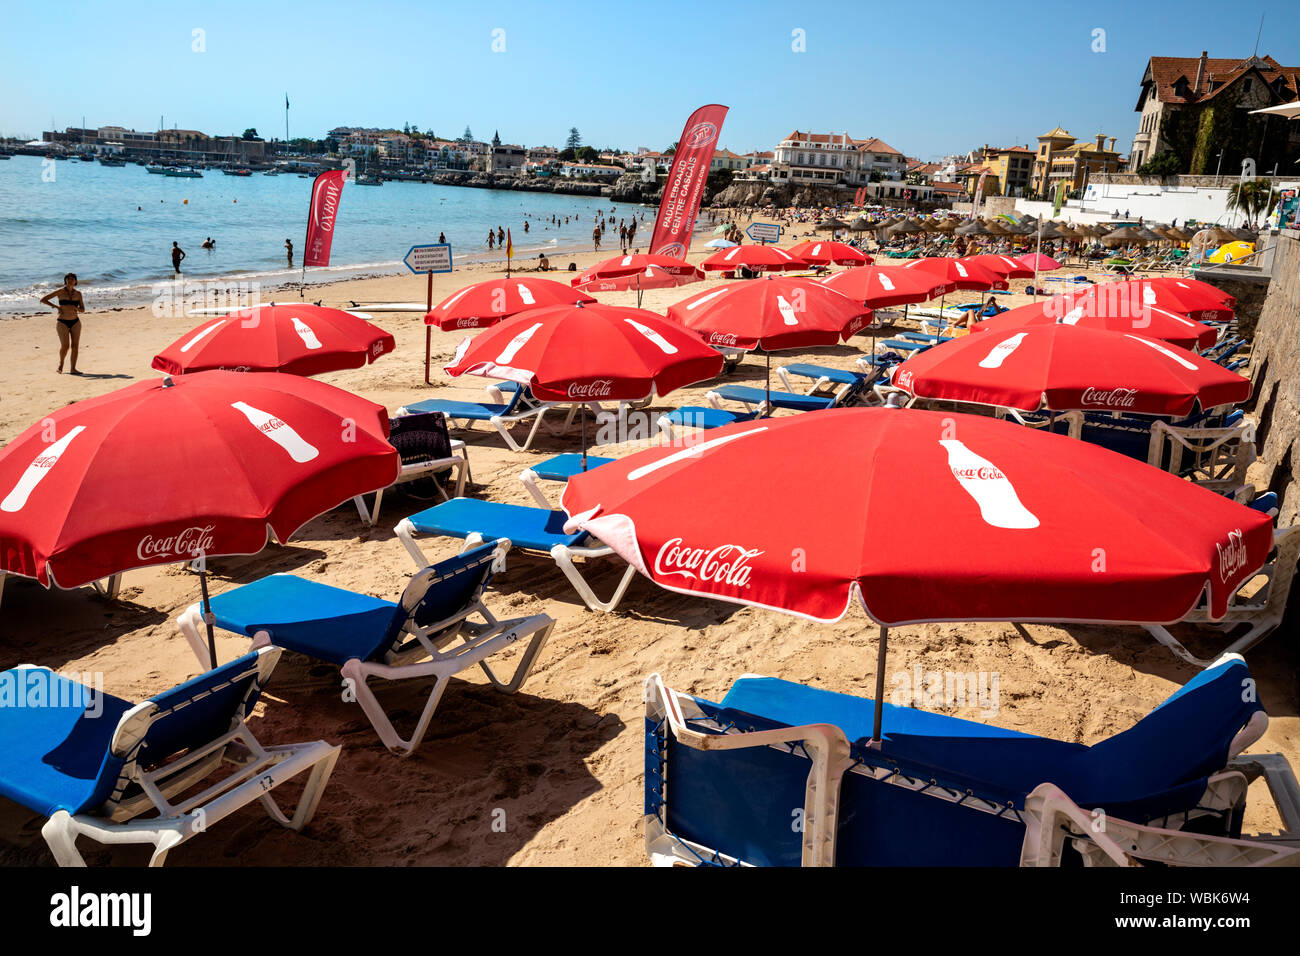 Coca cola umbrella hi-res stock photography and images - Alamy